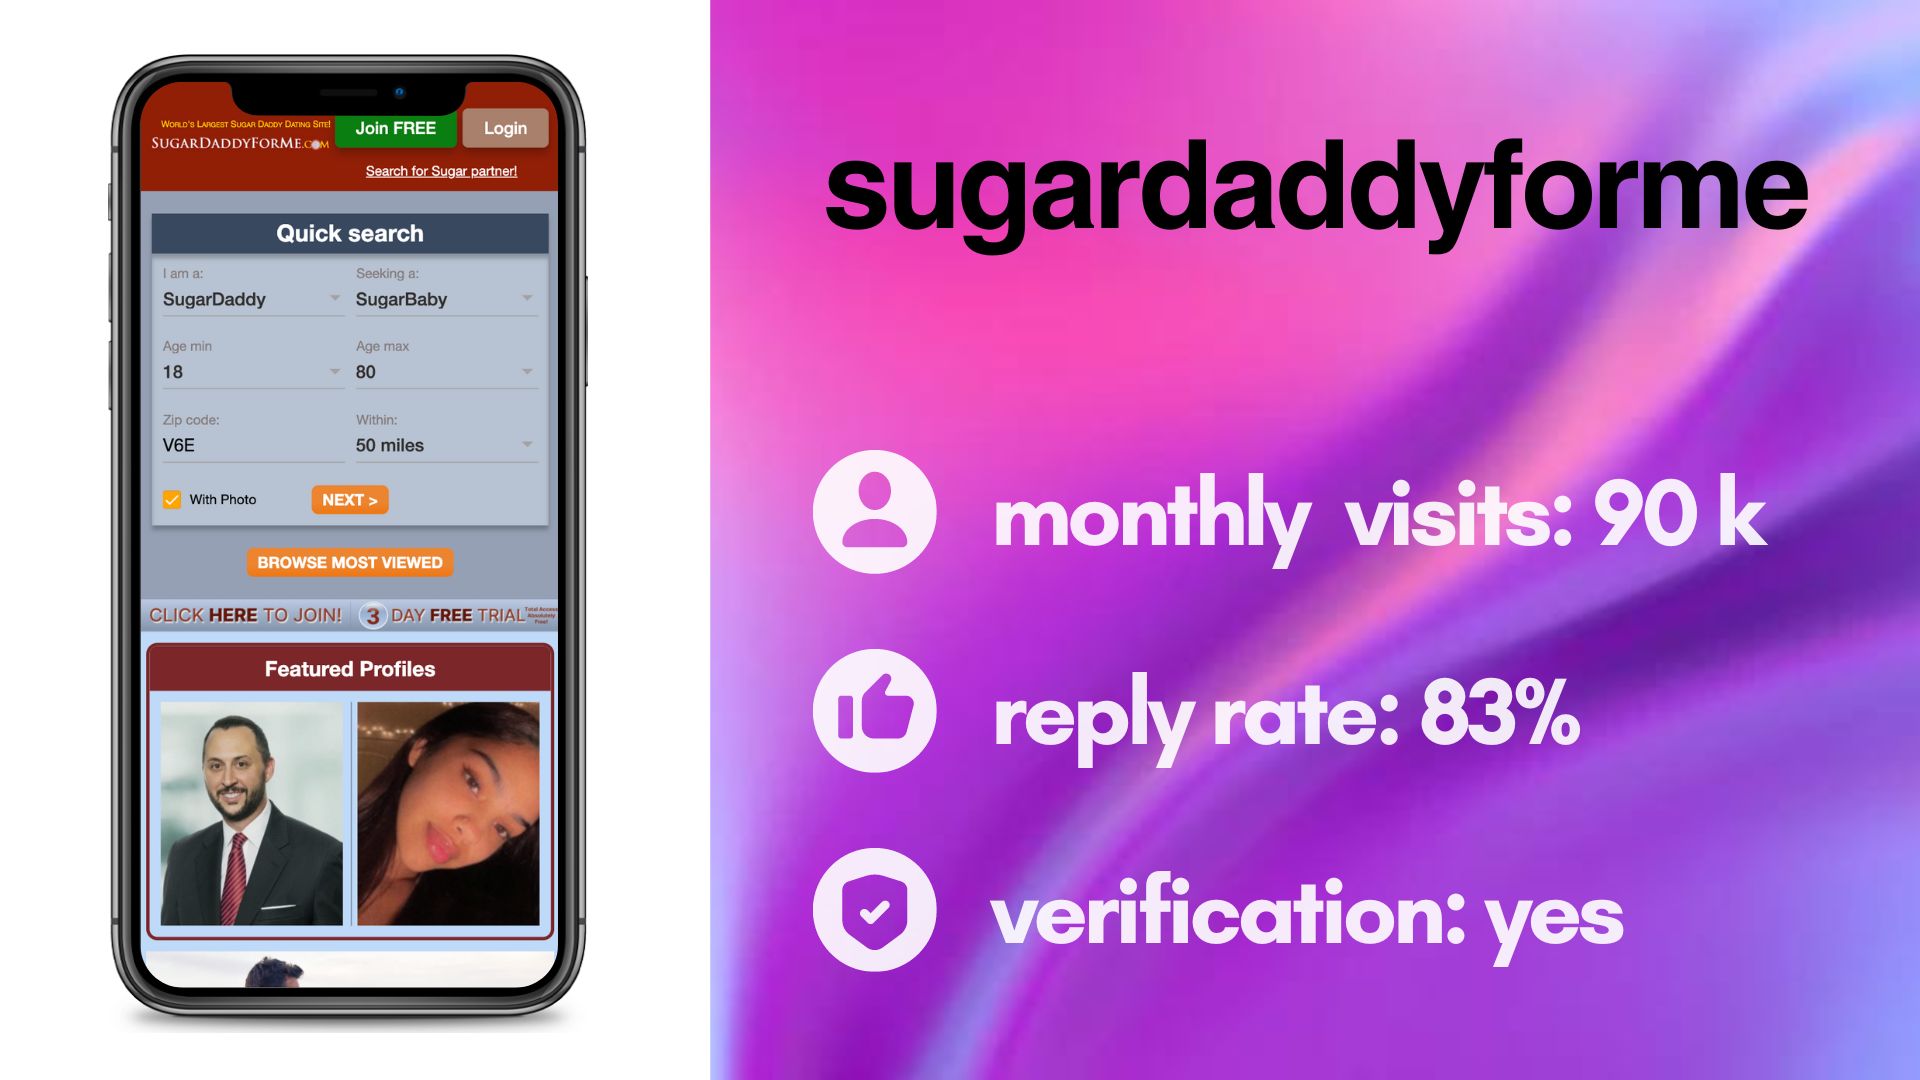 Sugardaddyforme Review 